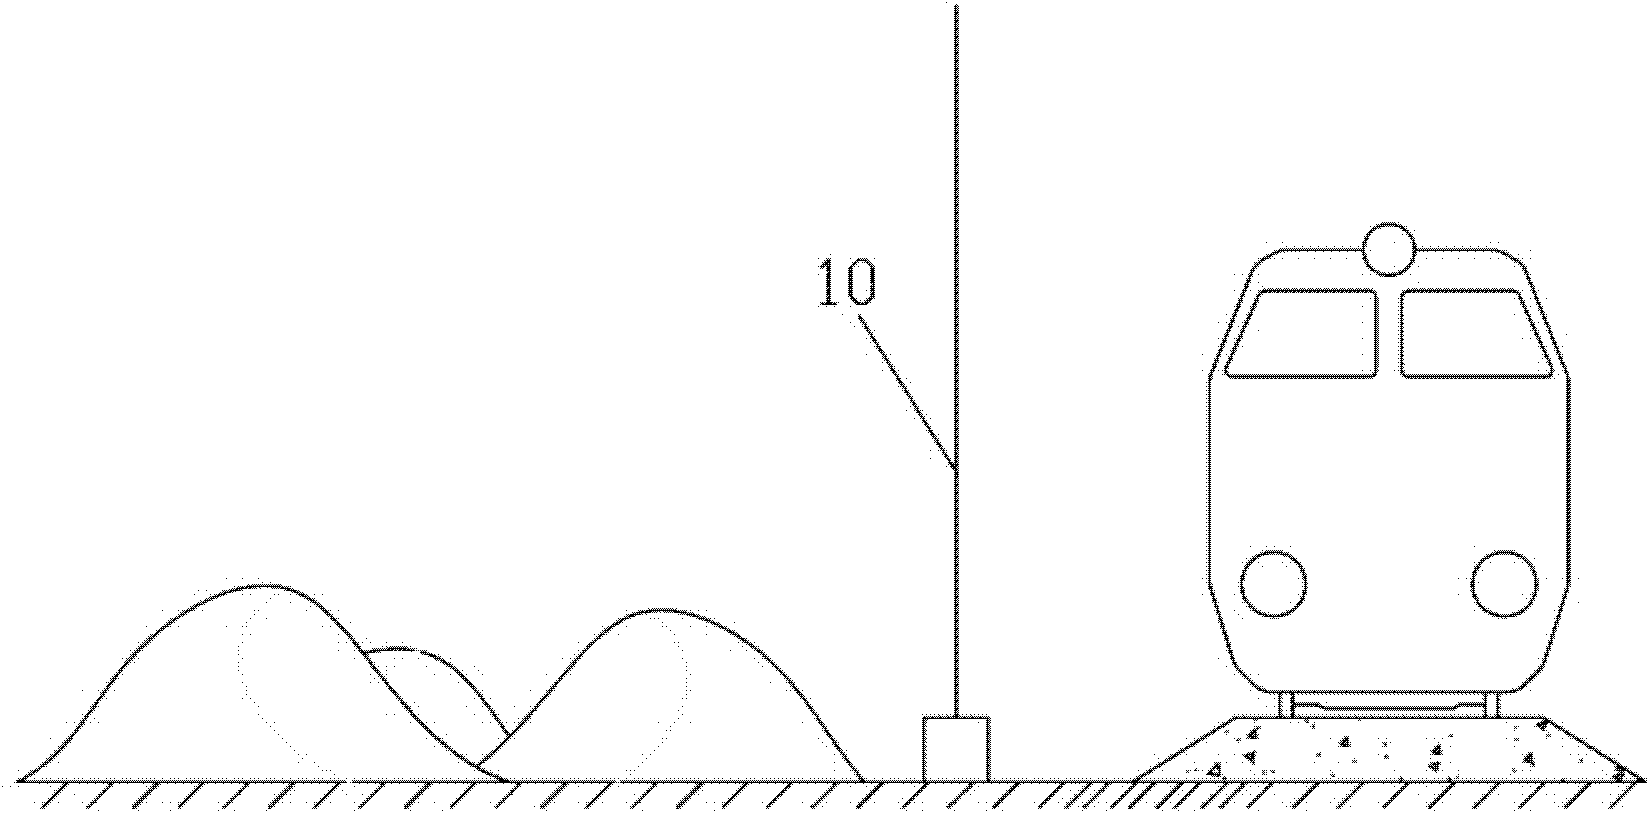 Wind shielding gravel mechanism not vertical to ground